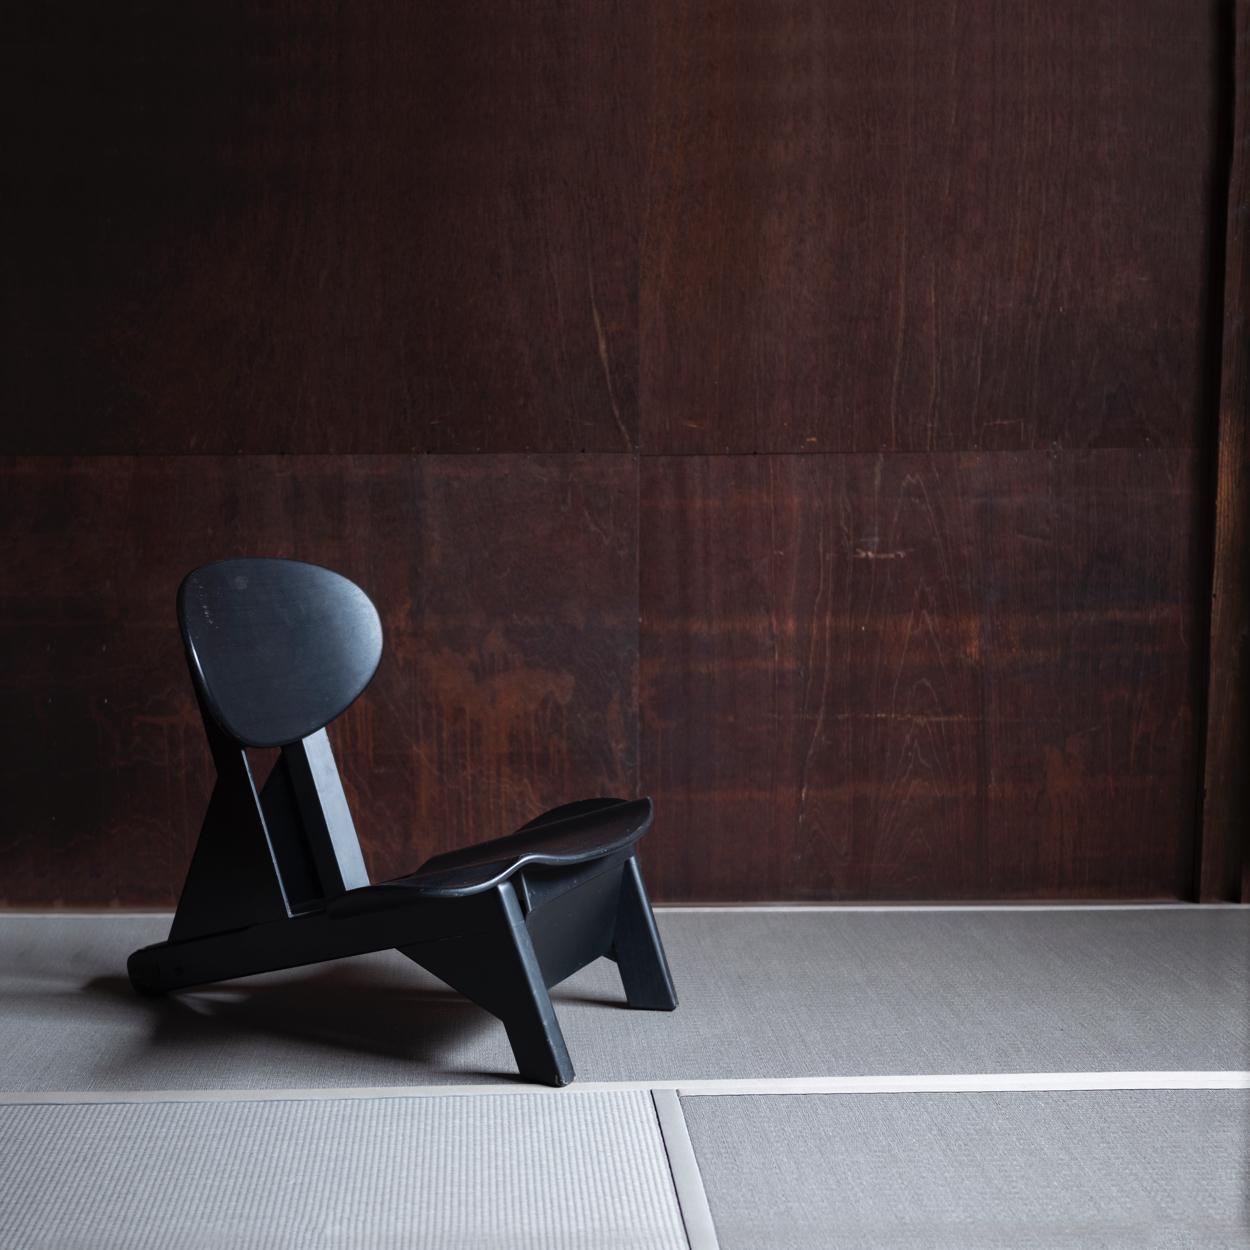 Alain Gaubert
ミニマル
彫刻
椅子